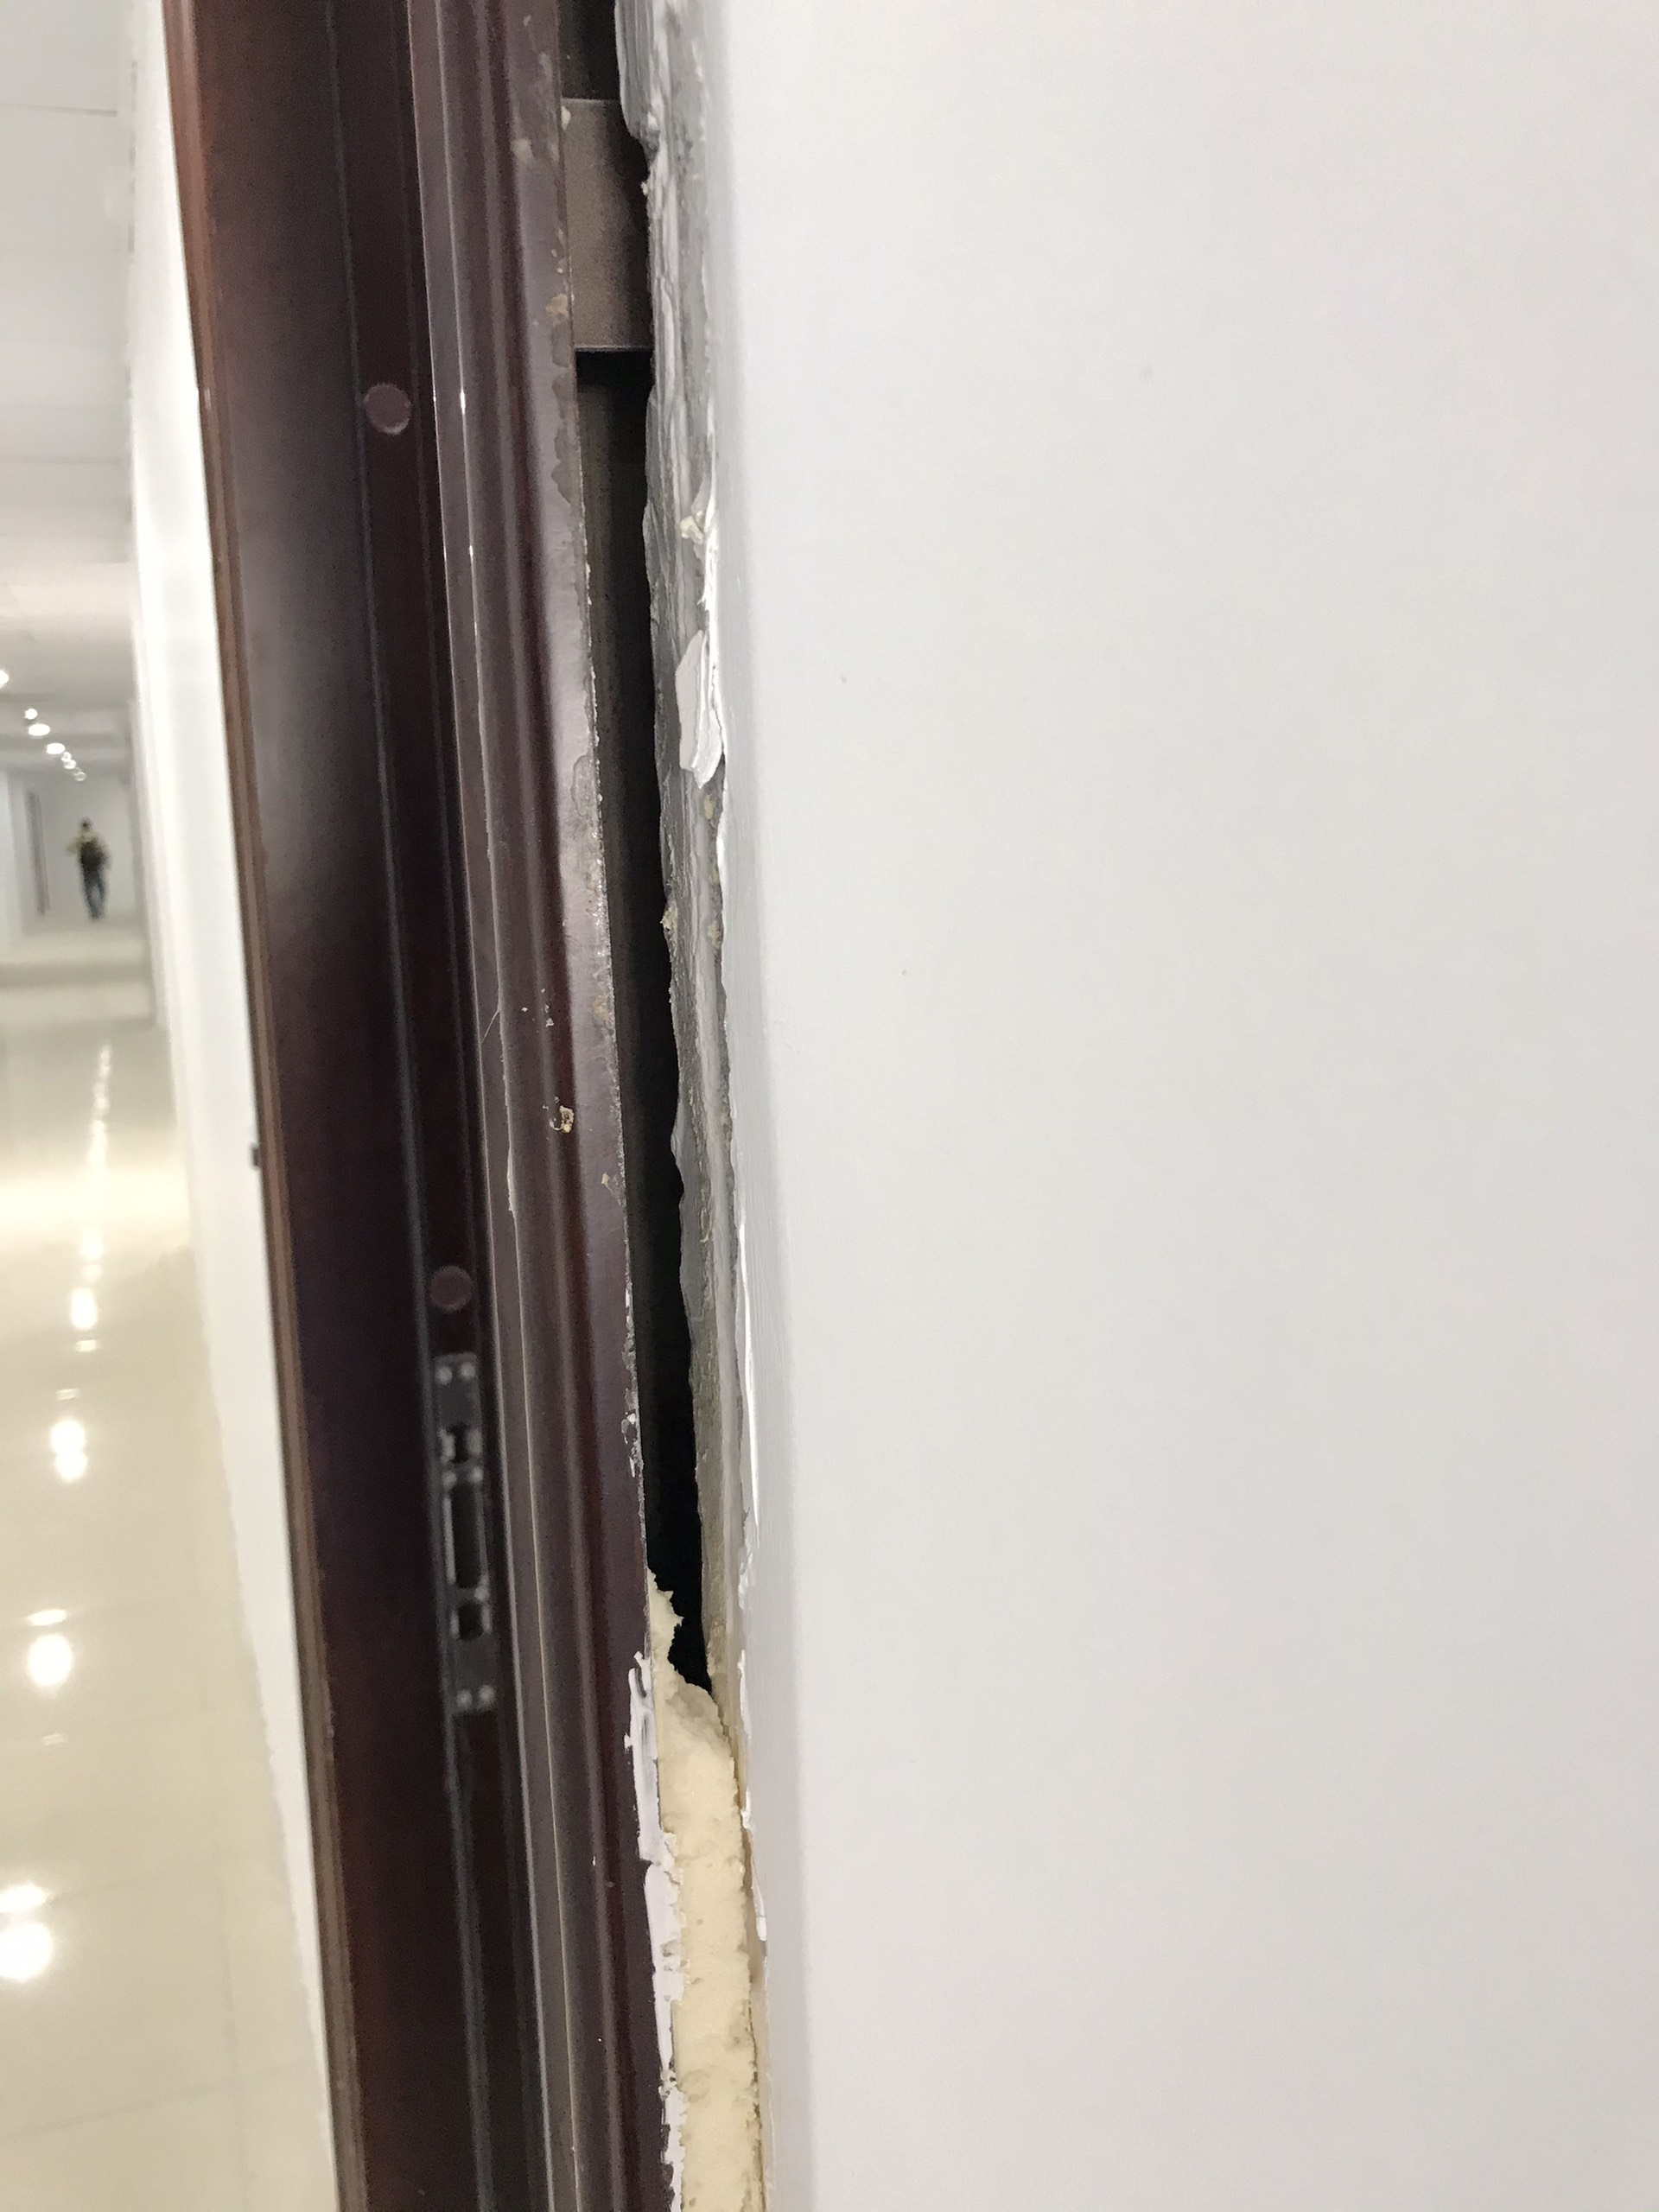 This supplied photo shows a door jamb peeling off at the P.H Nha Trang apartment complex in Nha Trang City, Khanh Hoa Province, Vietnam.